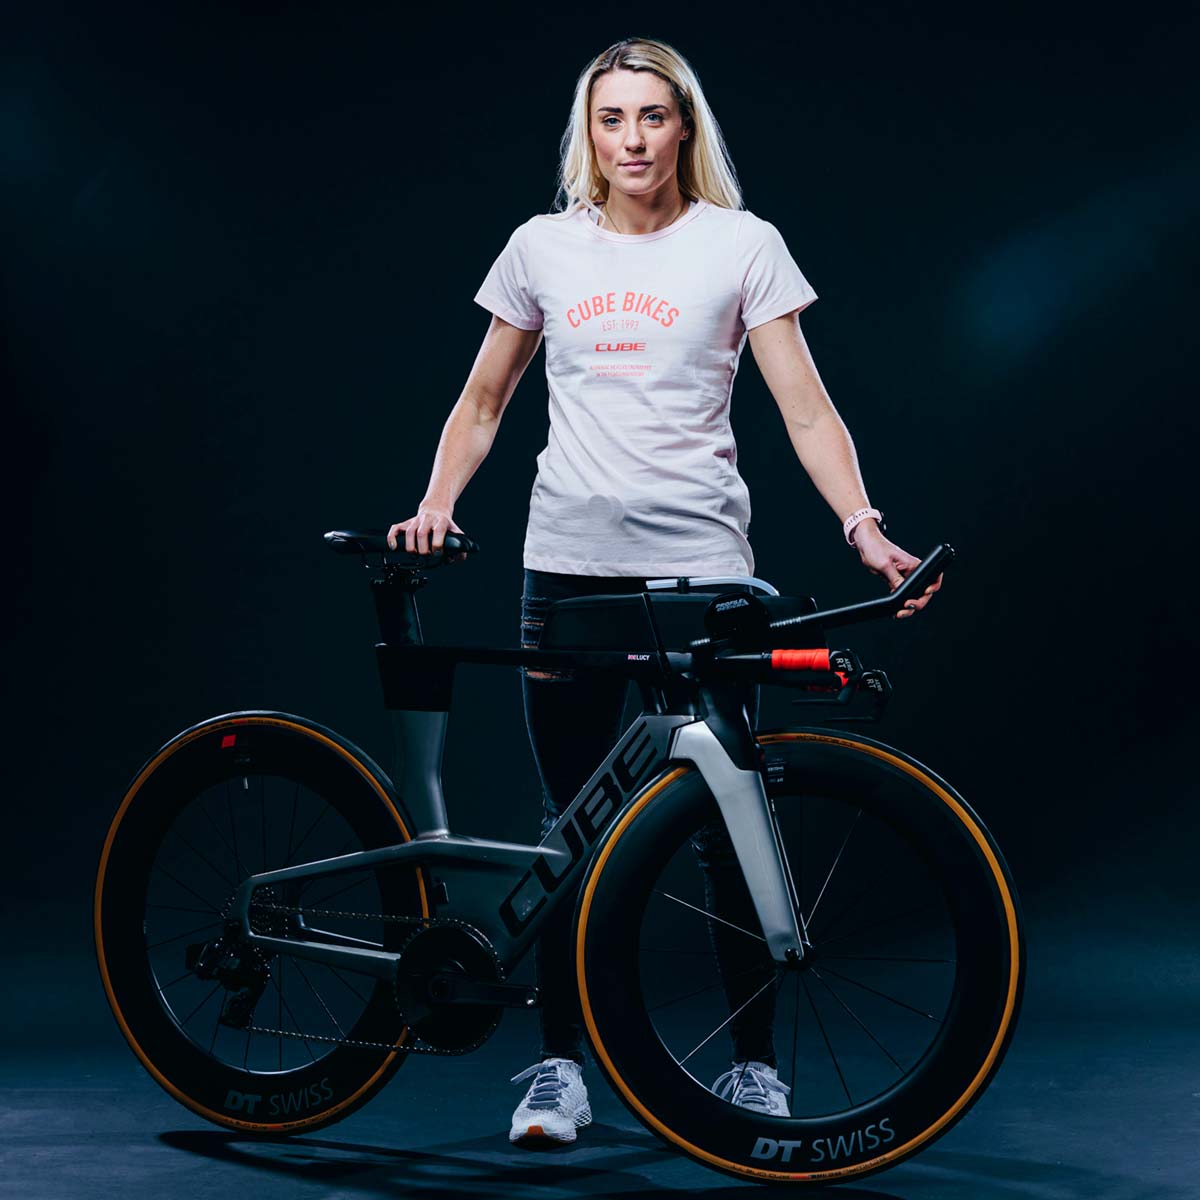 En TodoMountainBike: La triatleta Lucy Charles se une a Cube Bikes